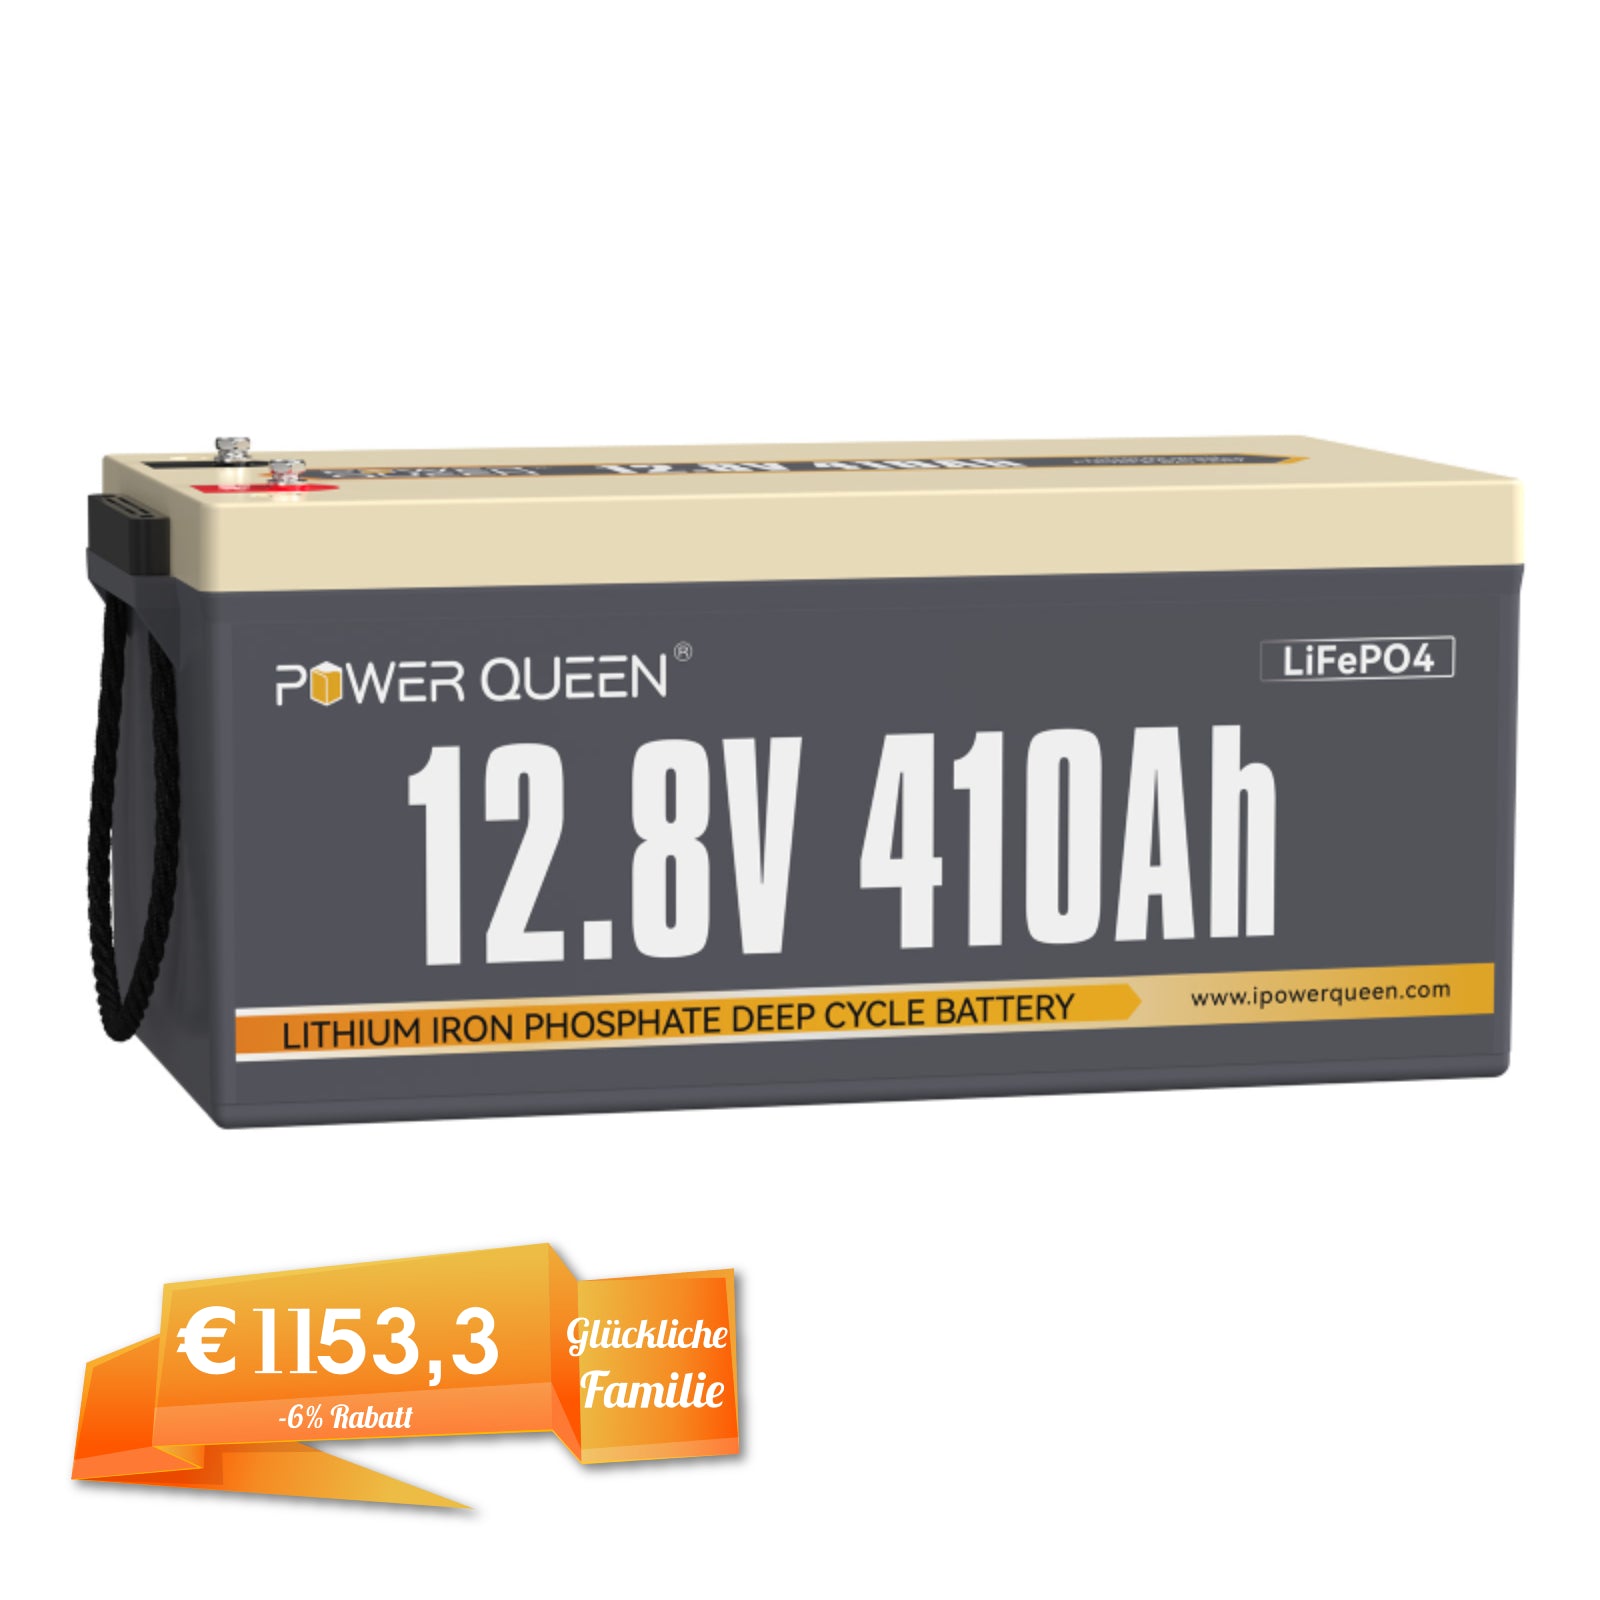 【TVA 0%】 Batterie Power Queen 12V 410Ah LiFePO4, BMS 250A intégré